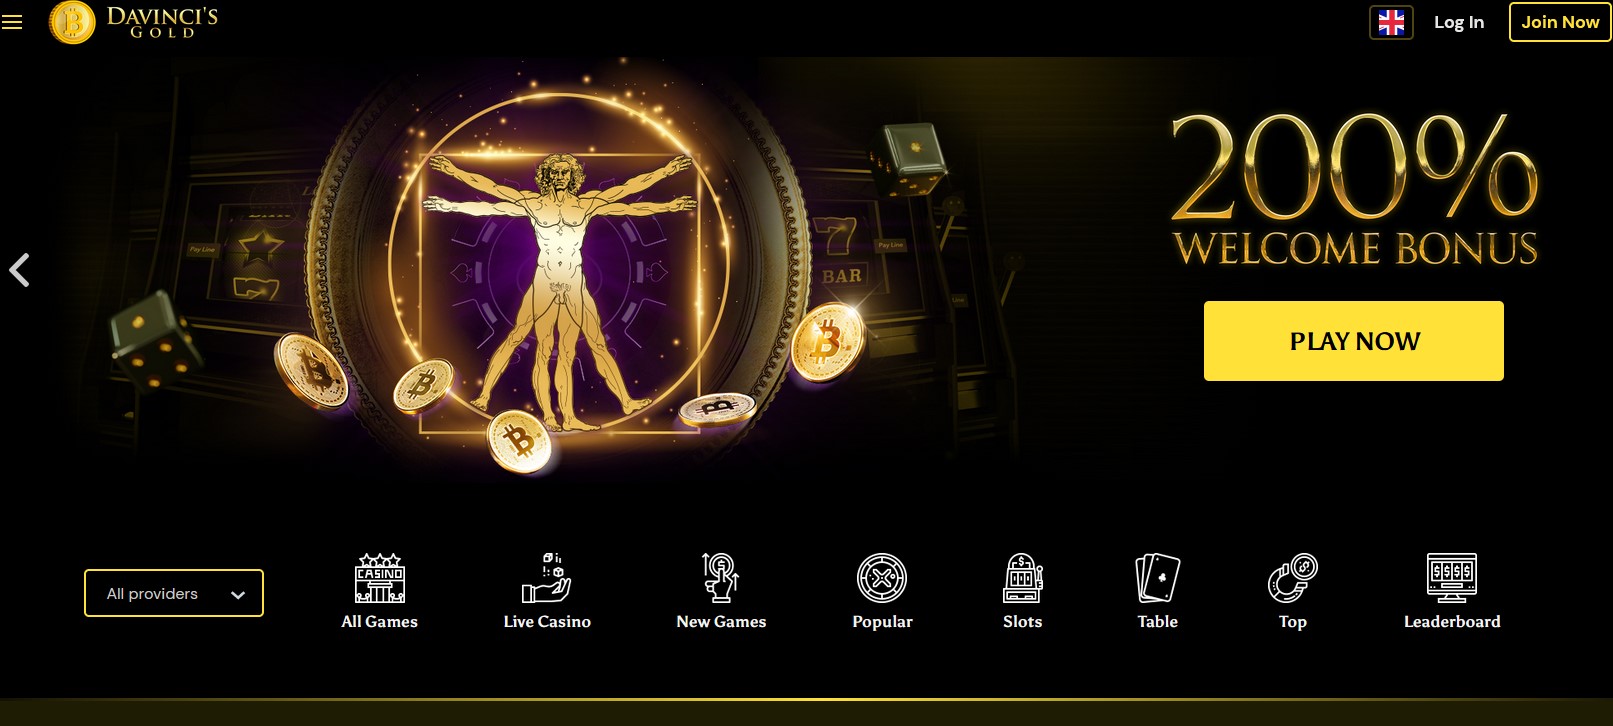 davincis gold casino website homepage screenshot